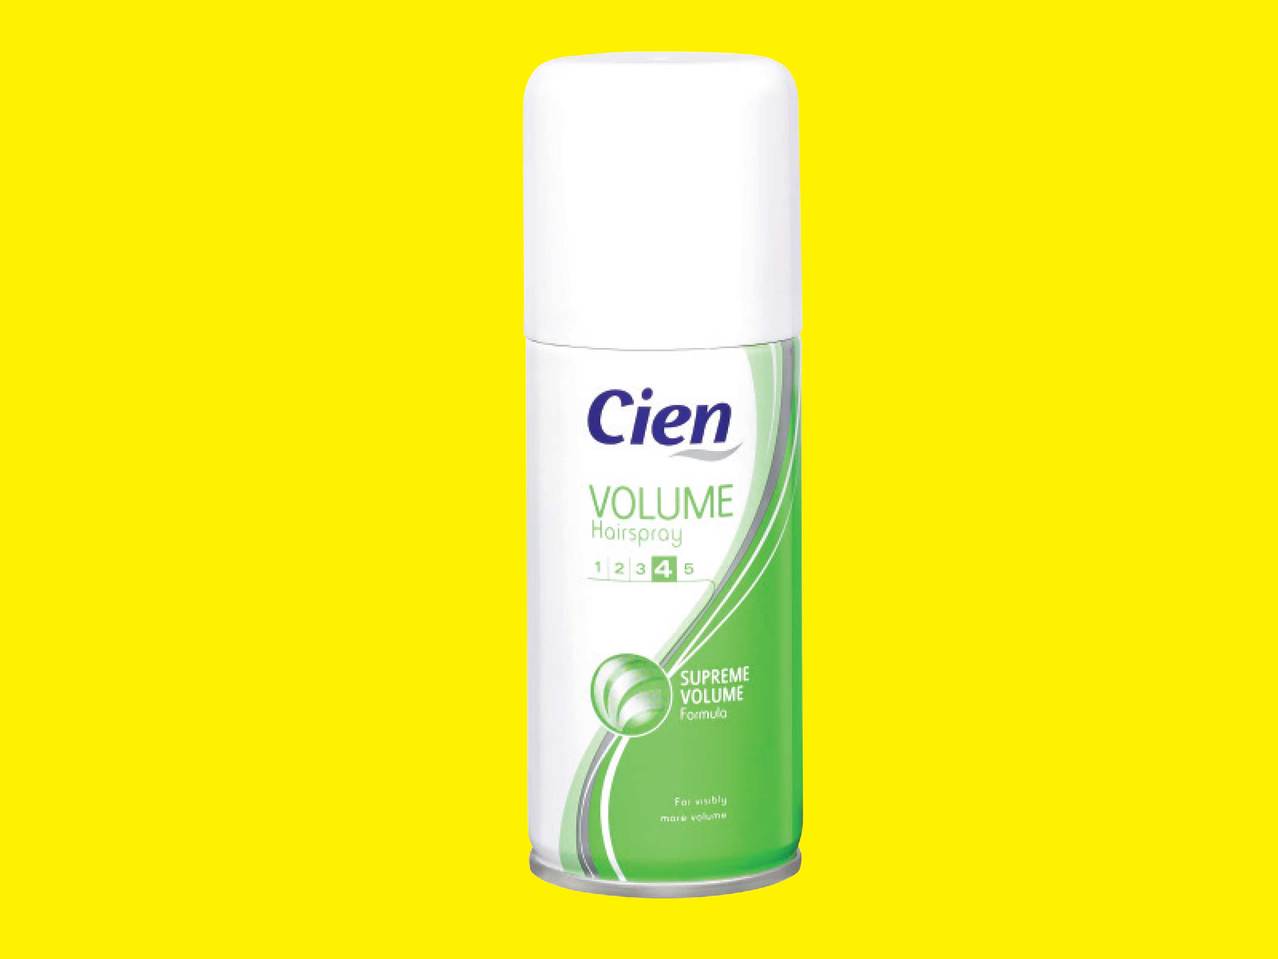 CIEN(R) Mini Hairspray Volume